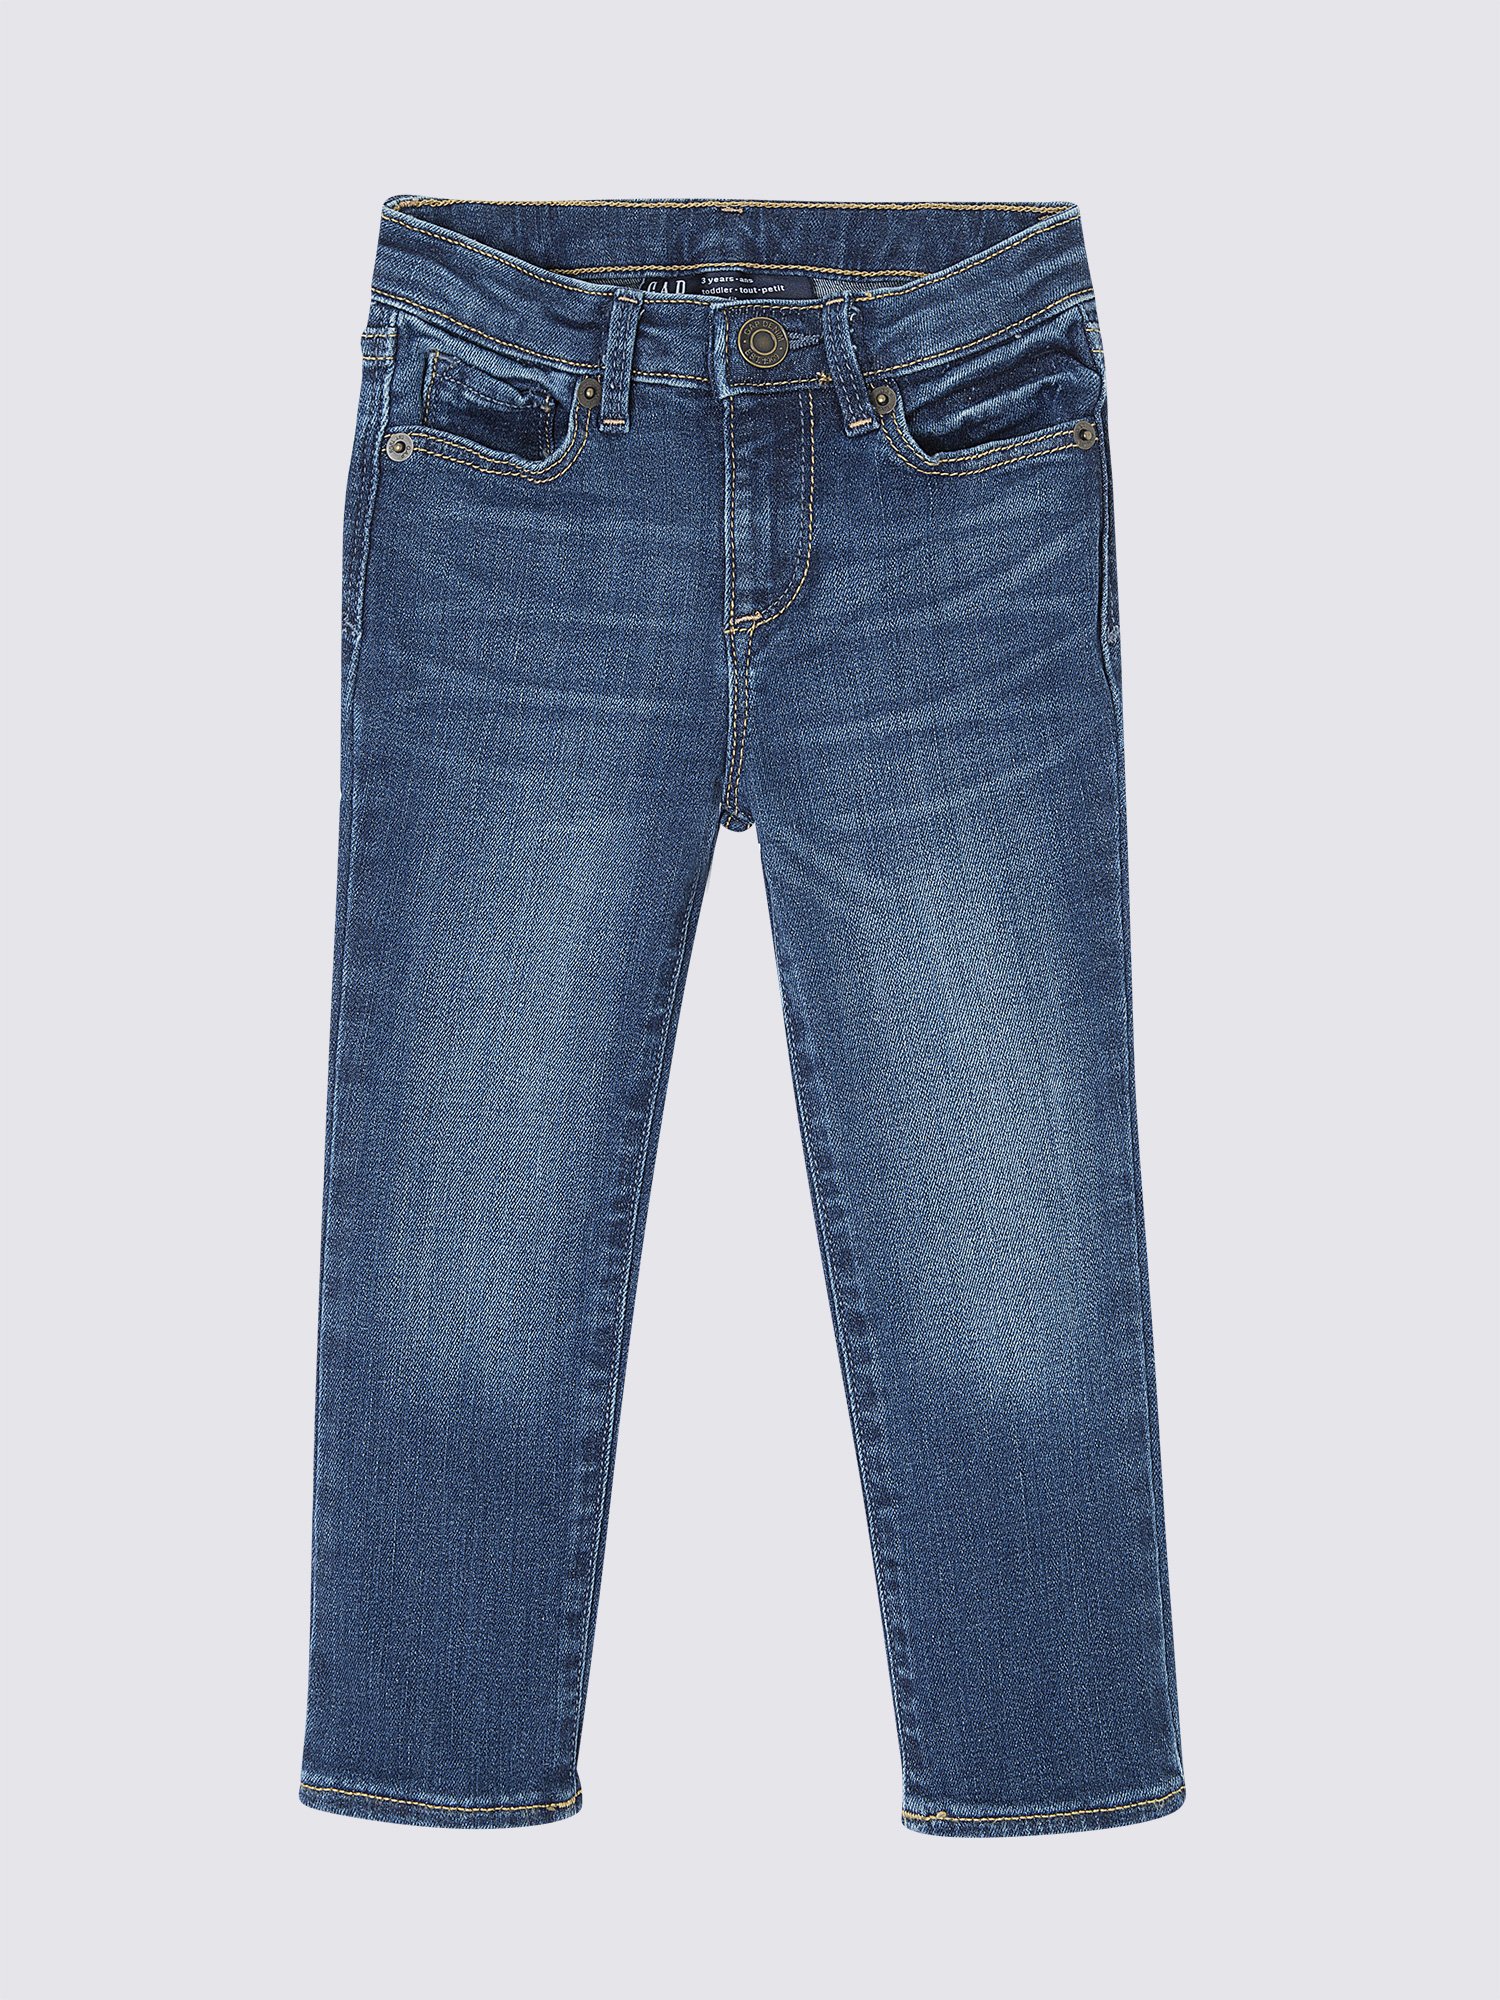 Superdenim Fantastiflex Skinny Jean Pantolon product image